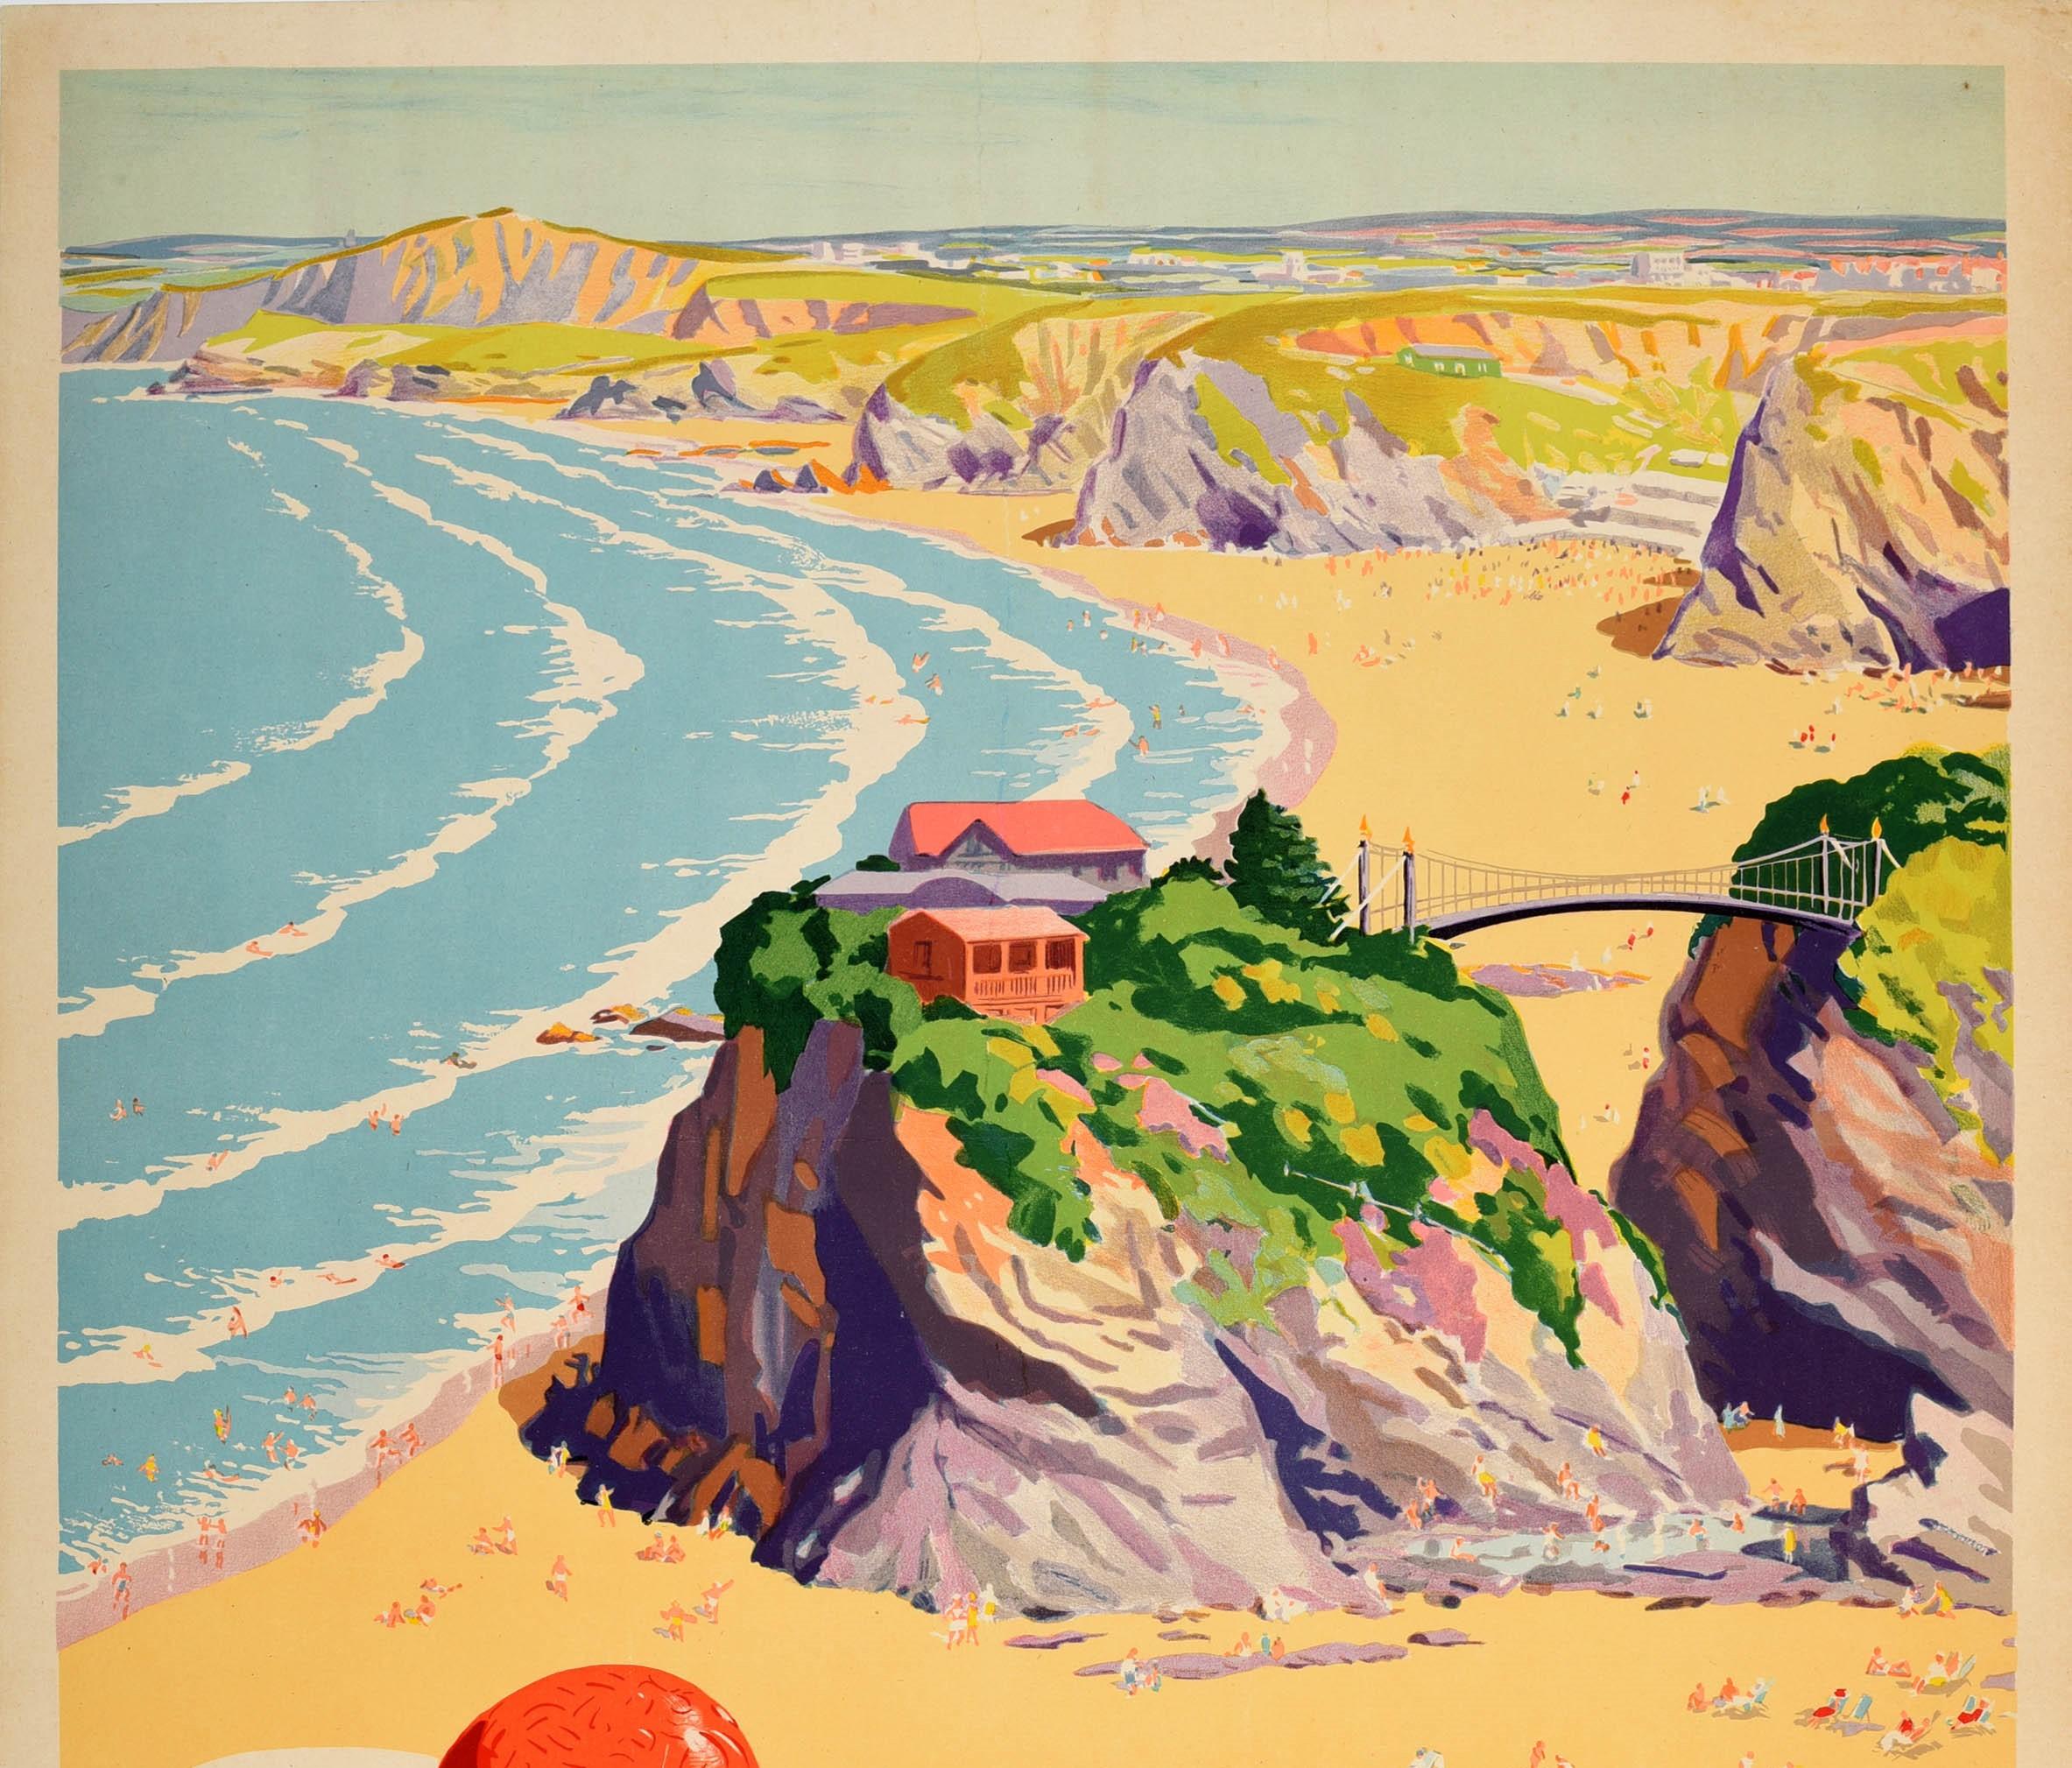 Original Vintage Poster Newquay Cornwall Coast British Railways Surfing Beach - Print by Arthur Harry Riley